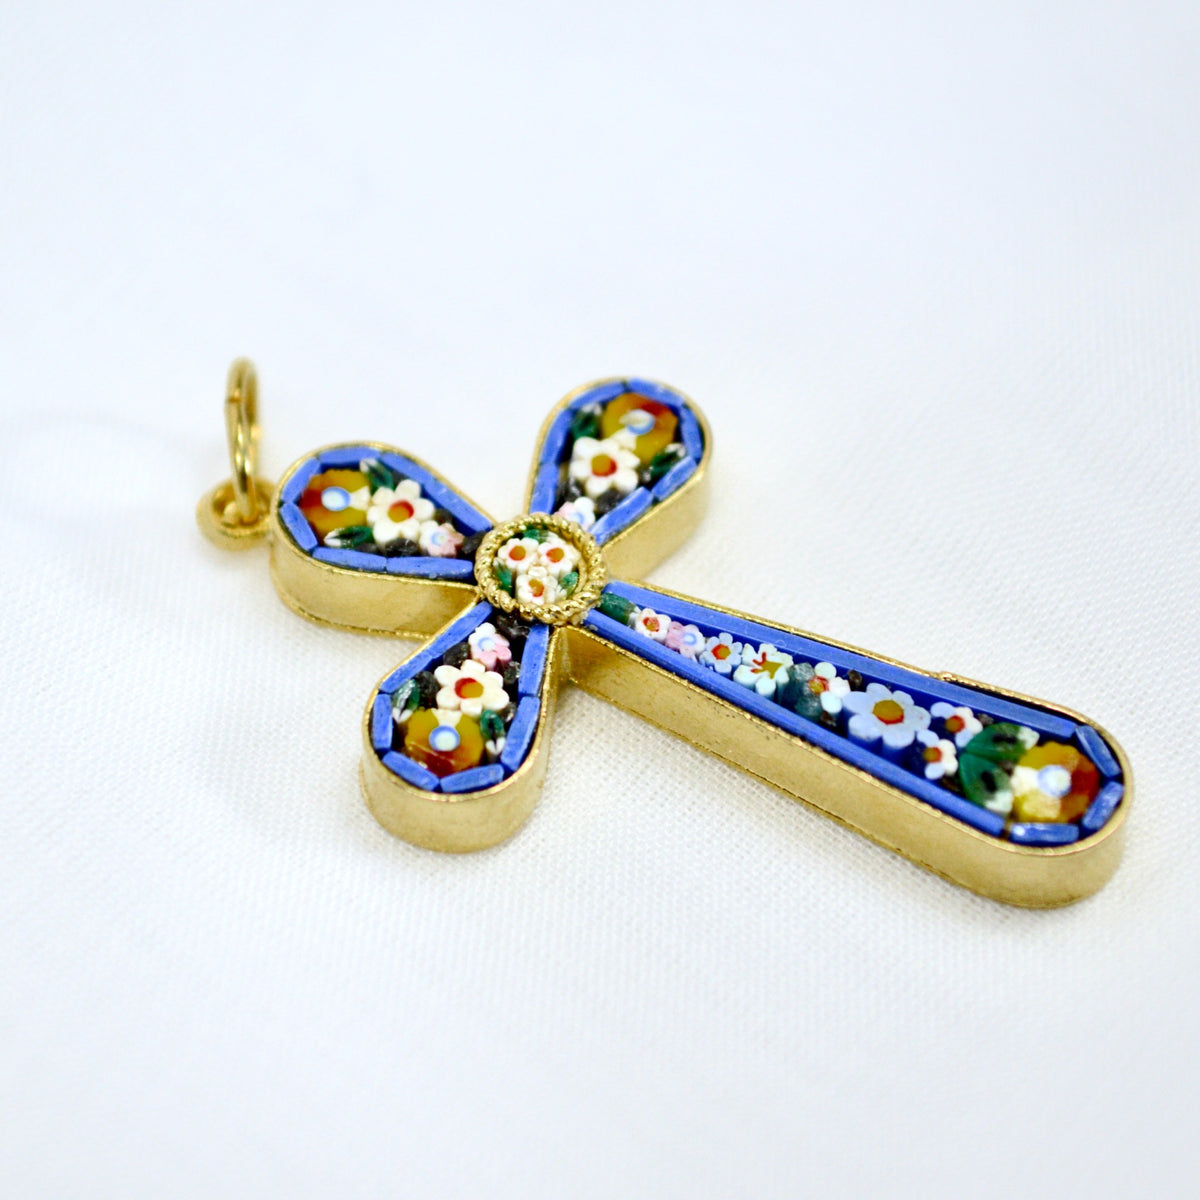 Florentine Glass Mosaic Cross Pendant, Floral Design, Made In Italy - My Italian Decor